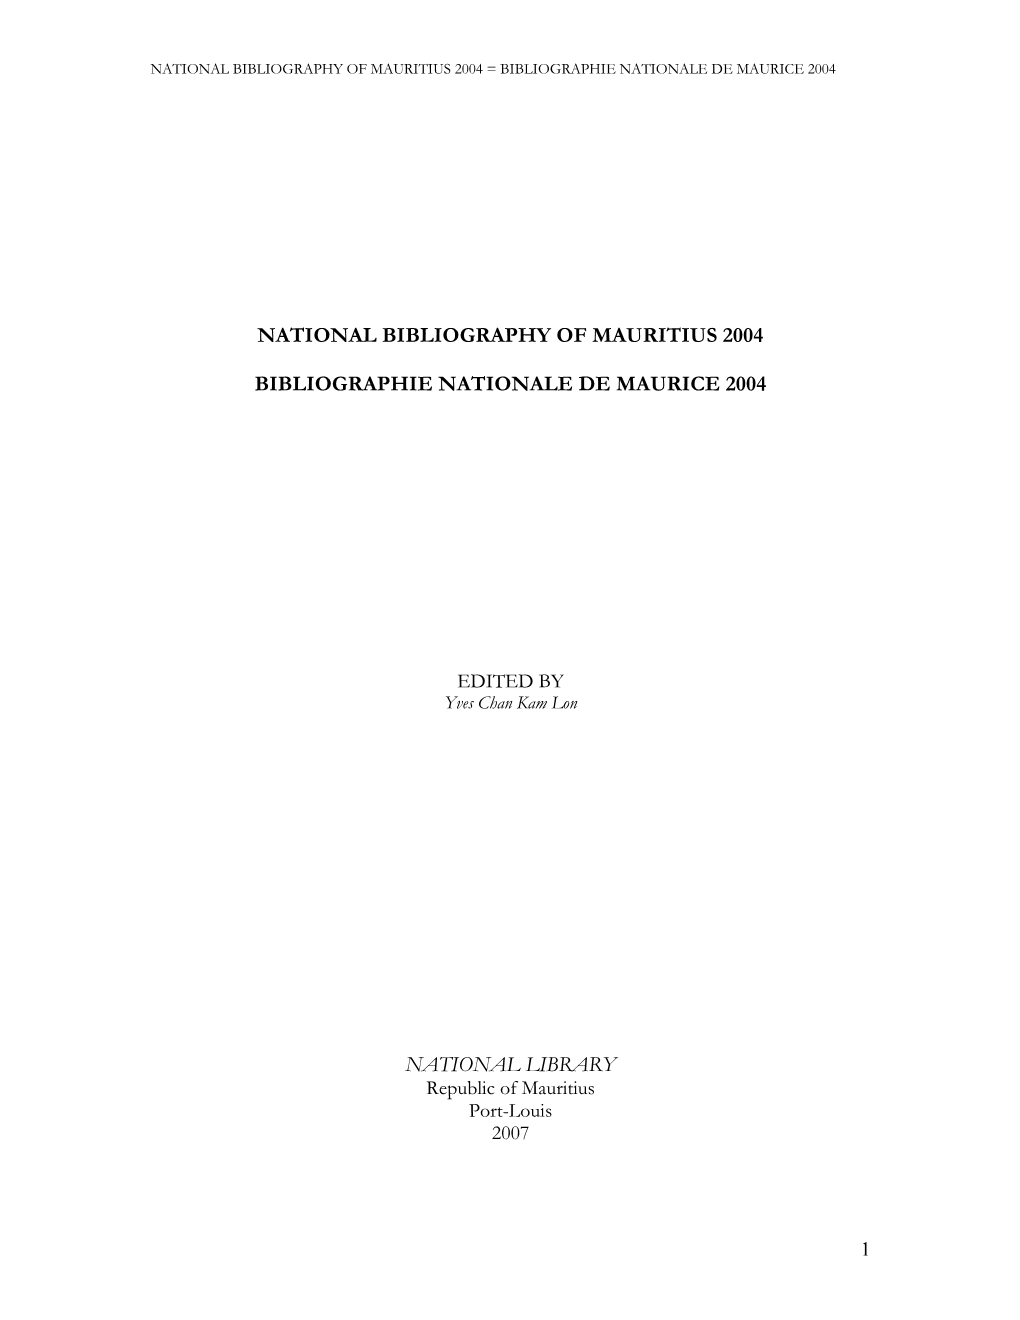 2004 = Bibliographie Nationale De Maurice 2004